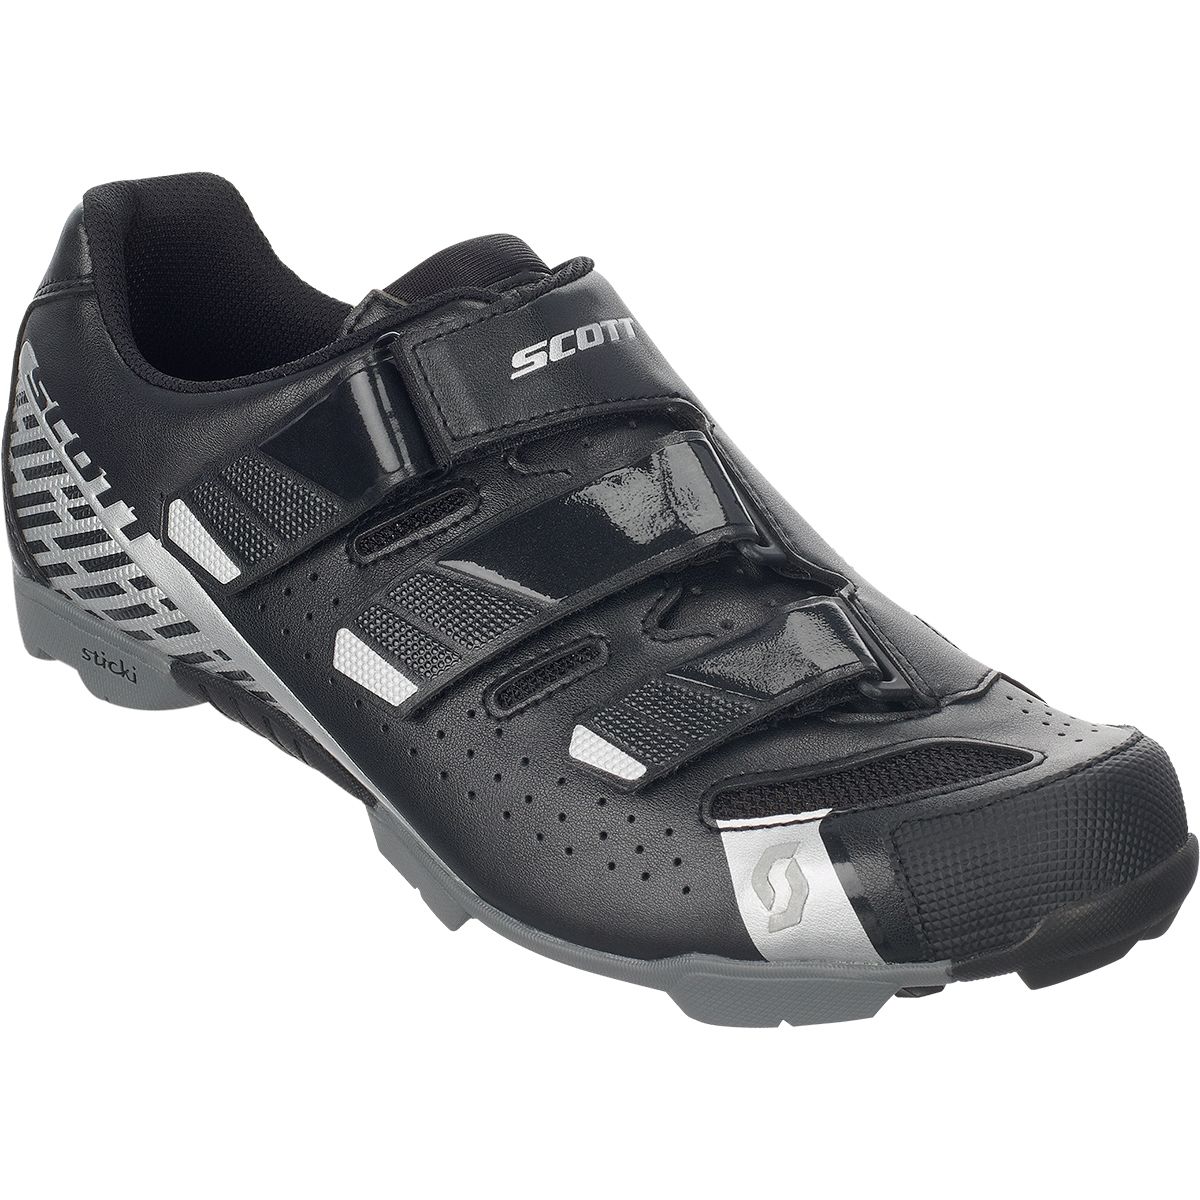 Scott MTB Comp RS Lady Cycling Shoe - Women's